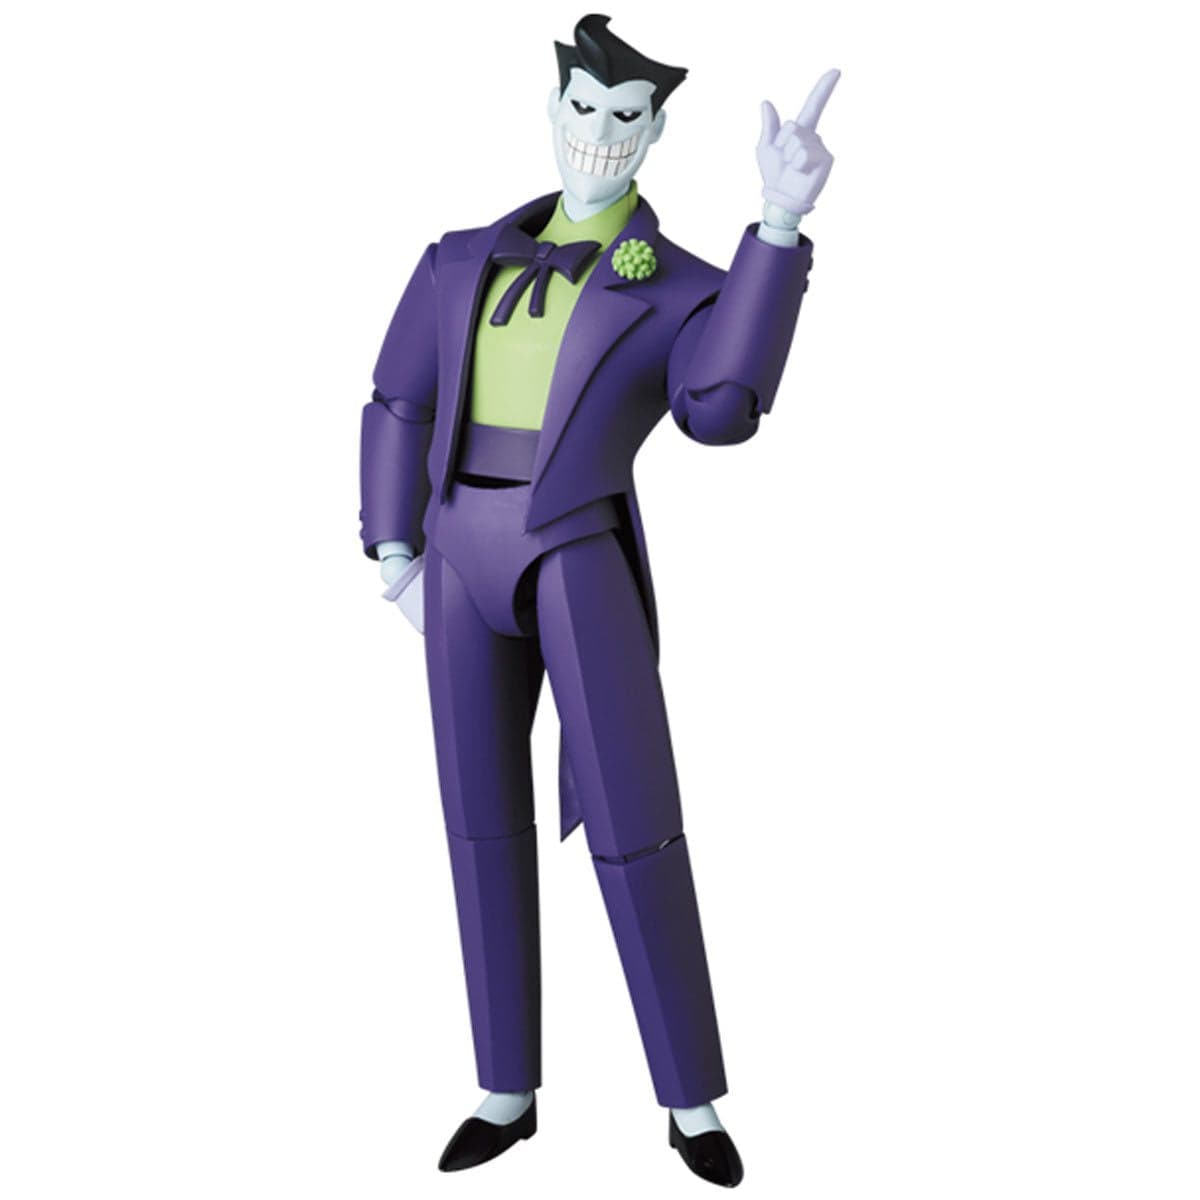 Medicom Toy MAFEX No. 167 The New Batman Adventures The Joker Action Figure